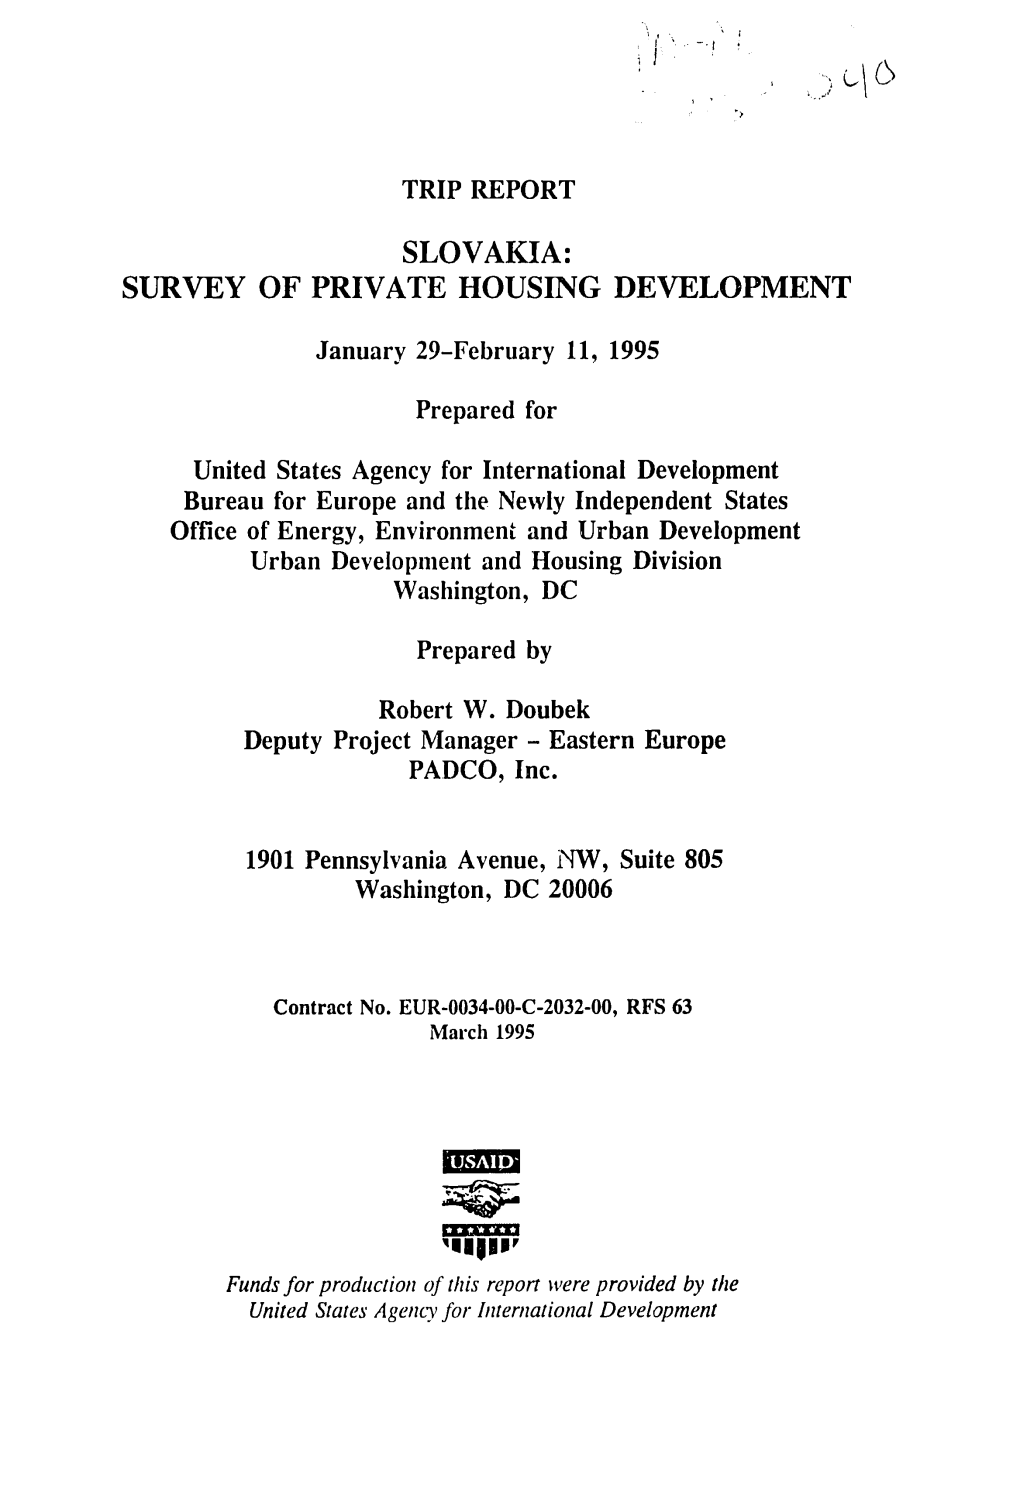 Slovakia: Survey of Private Housing Development